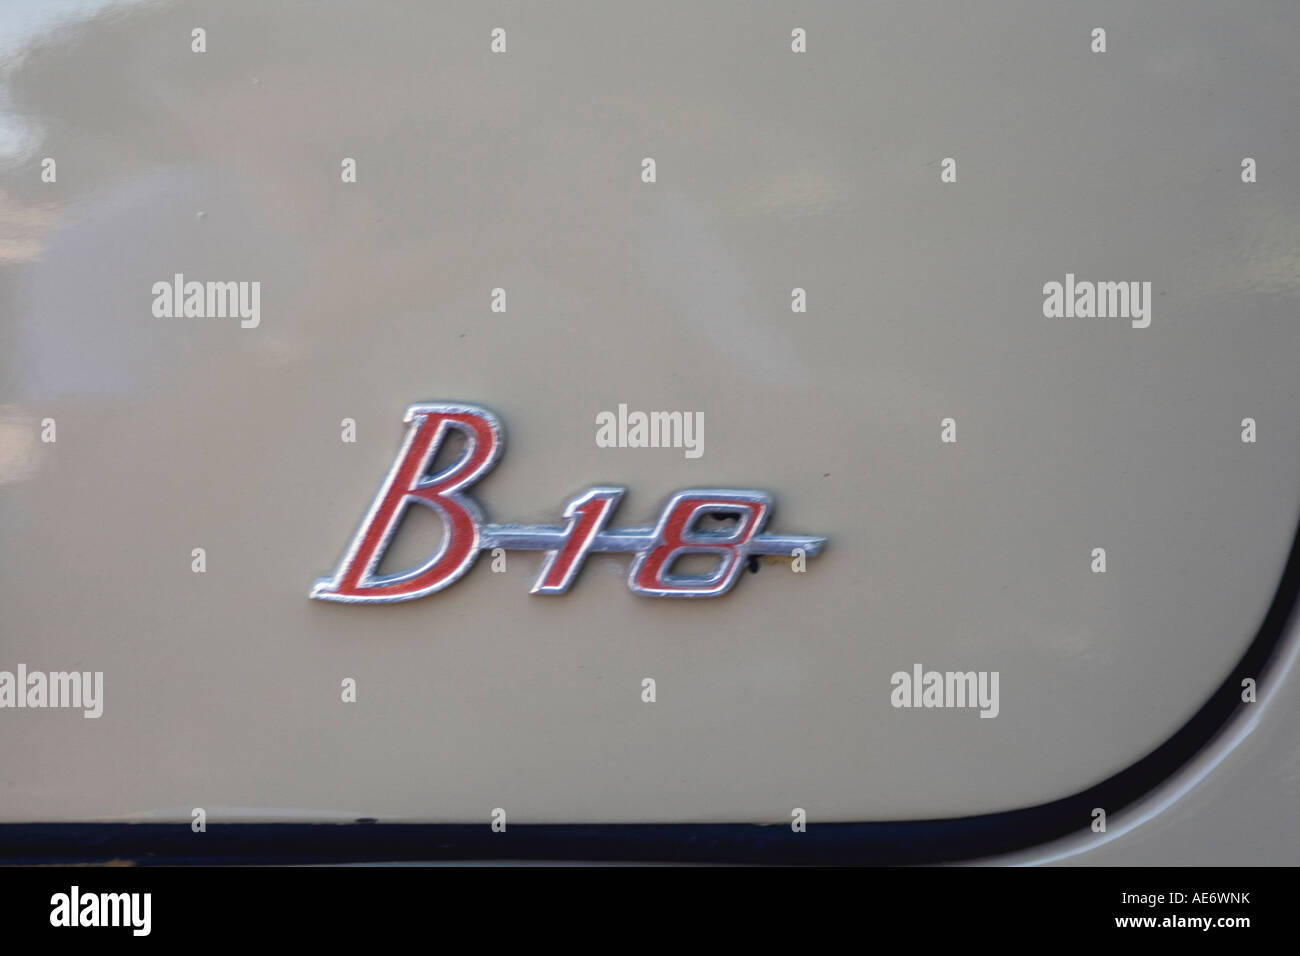 B18 logo on old Volvo Stock Photo